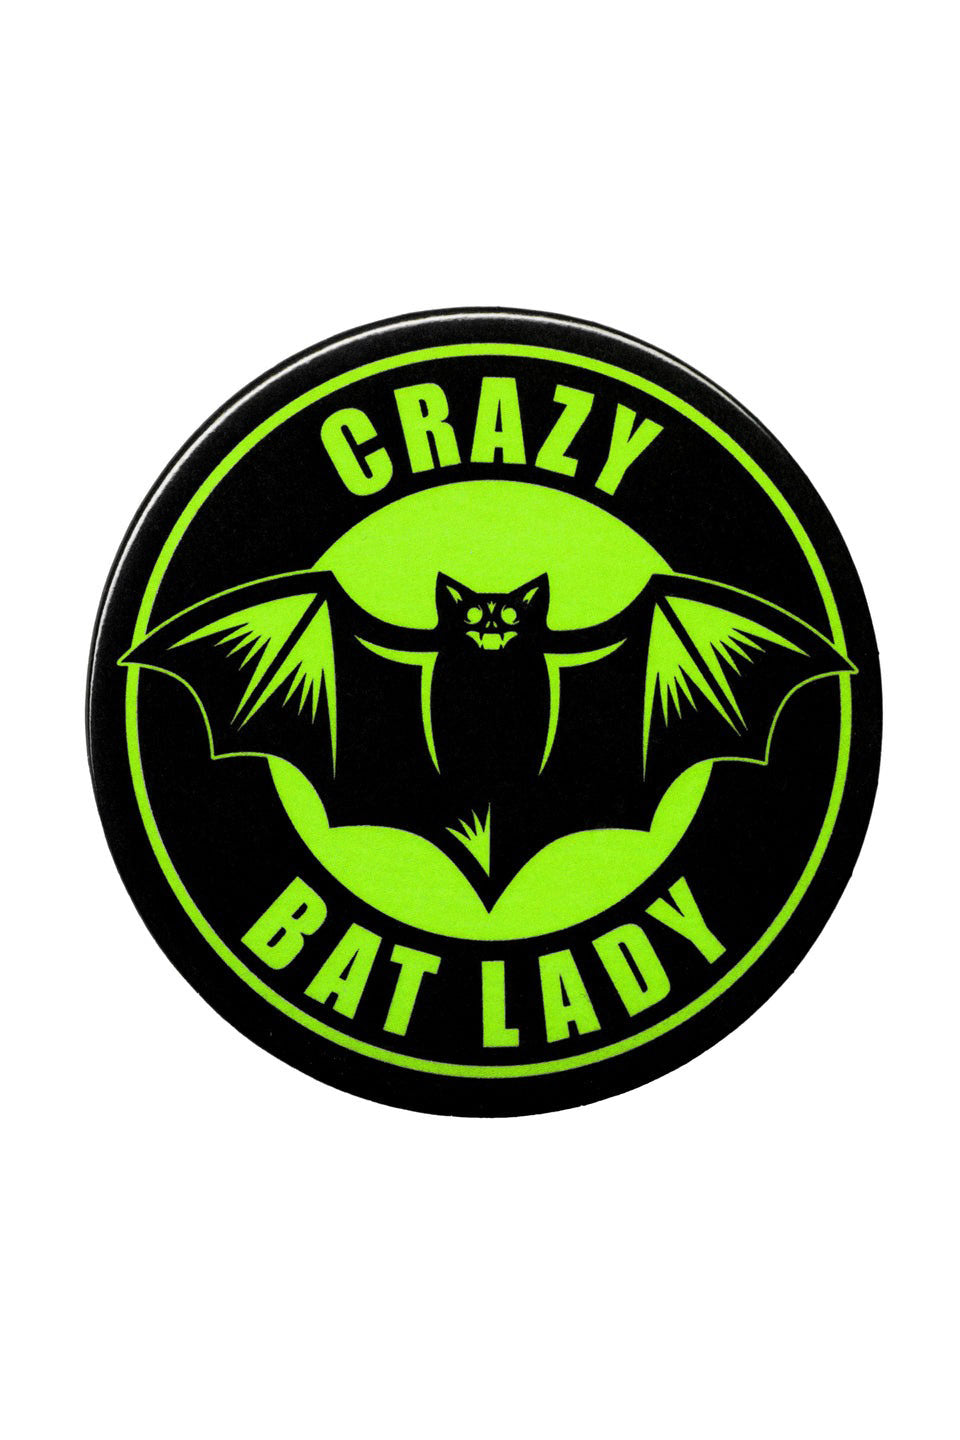 Crazy Bat Lady Magnet